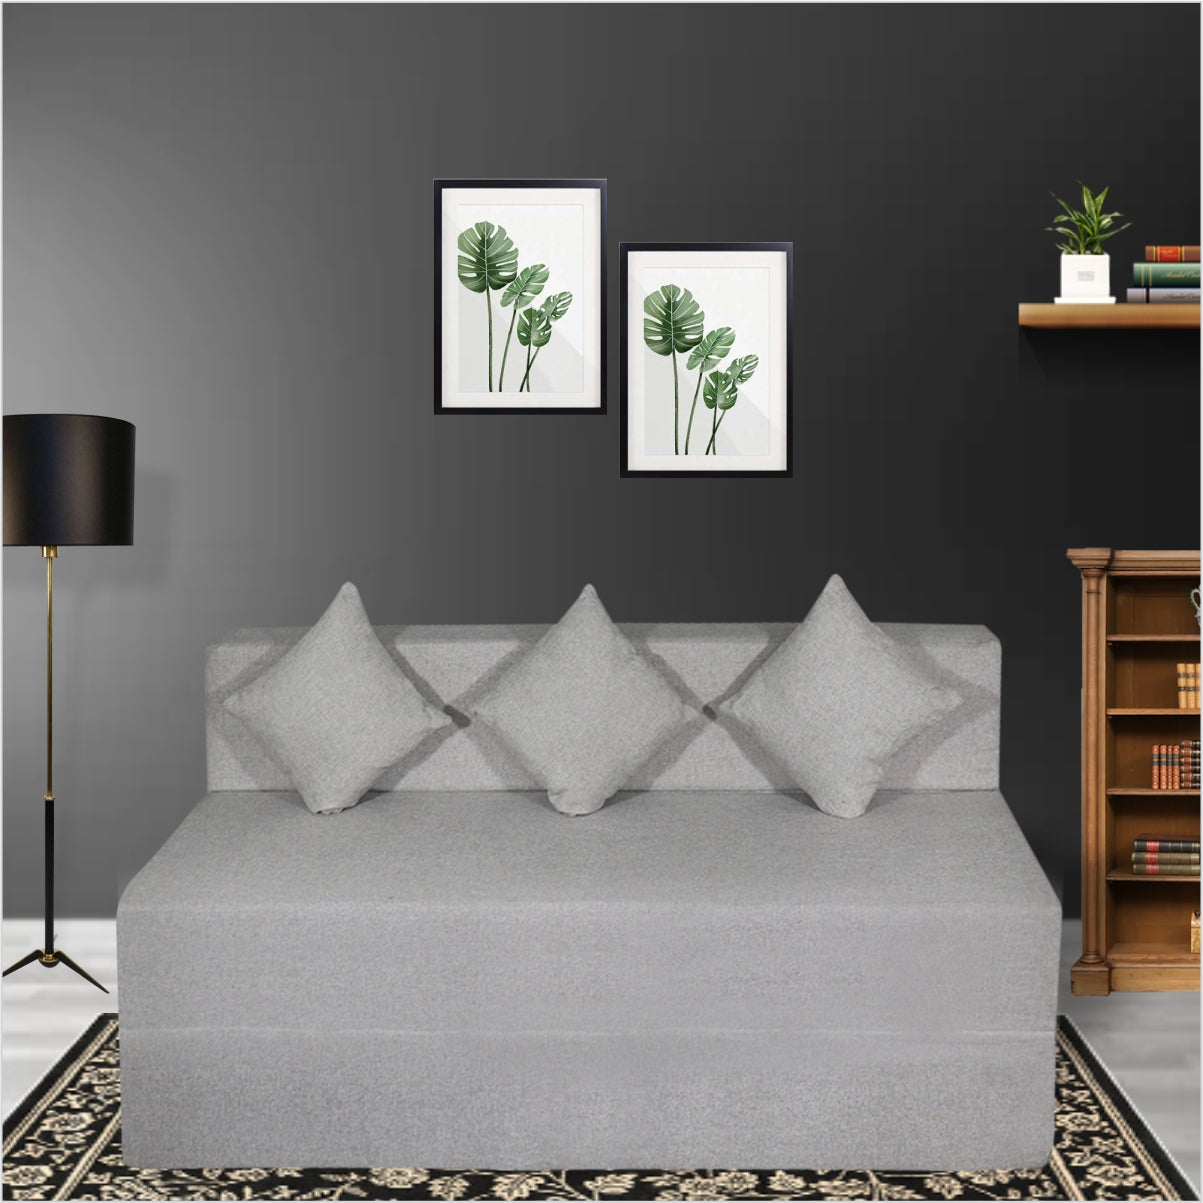 Light Grey Jute Fabric 6×6 Sofa cum Bed with 3 Cushion